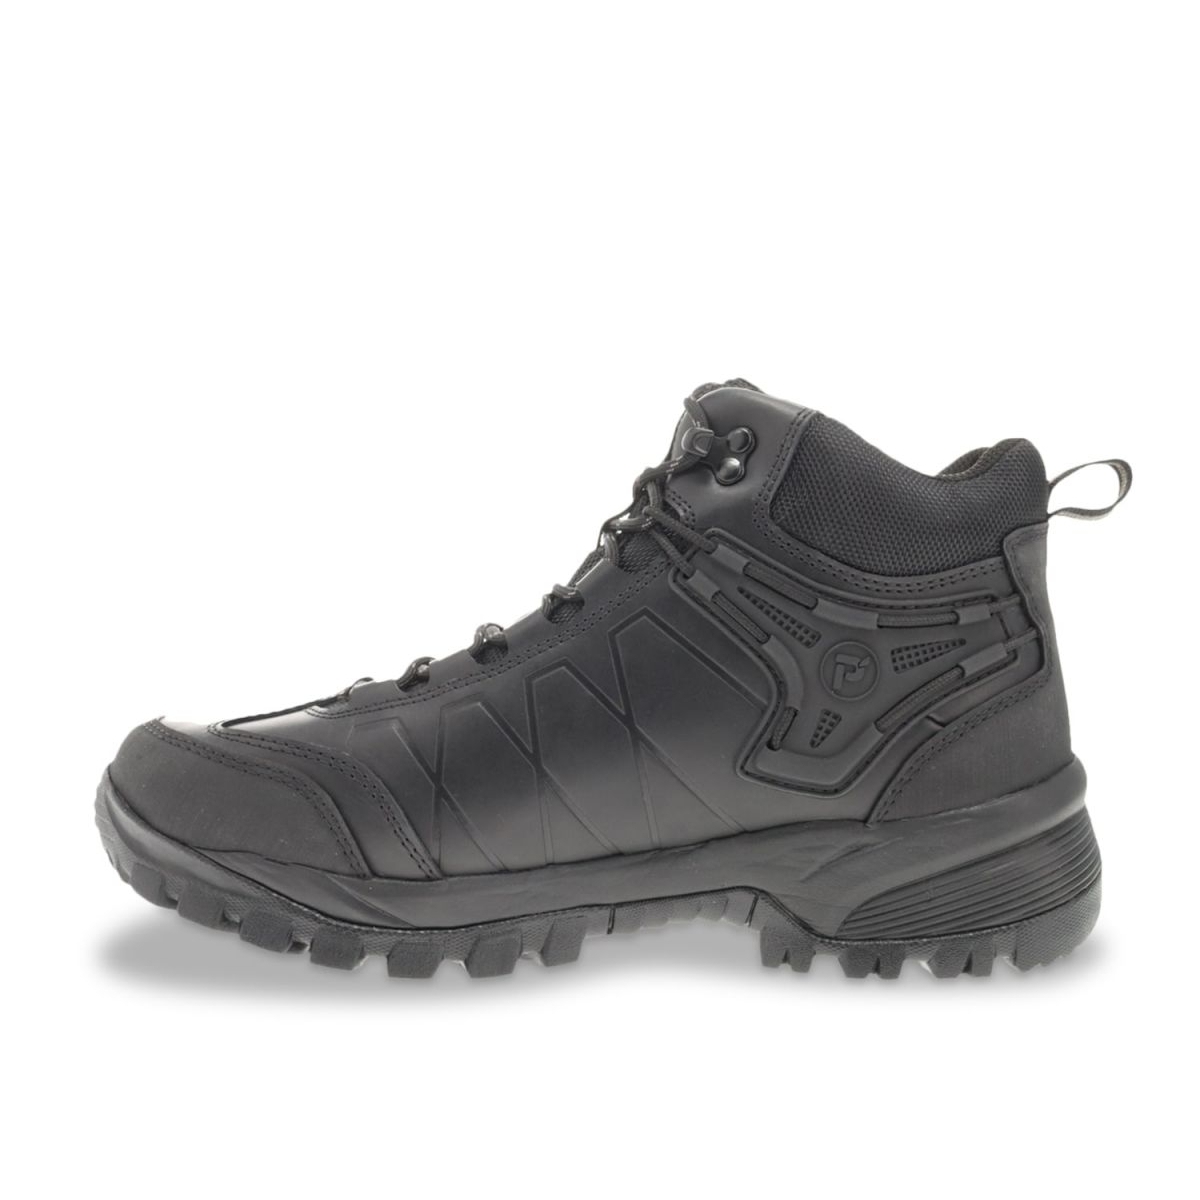 Propet Men's Ridge Walker Force Hiking Boots Black - MBA052LBLK BLACK - BLACK, 12 Wide